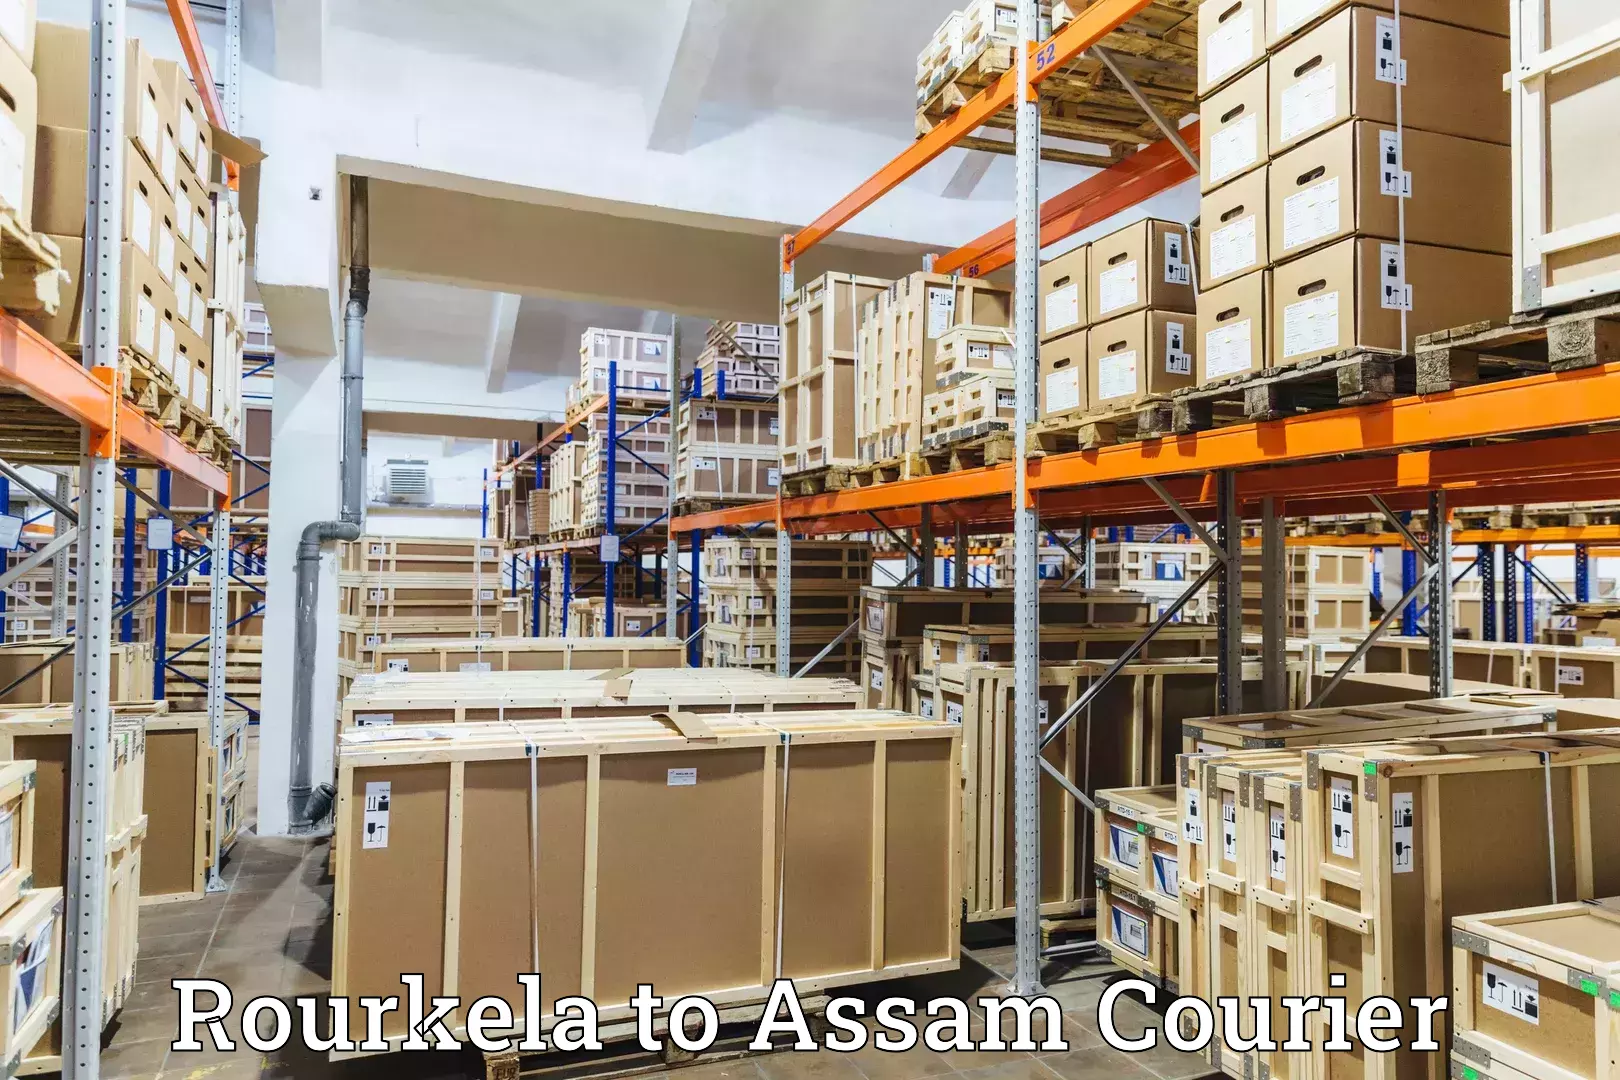 Courier service innovation Rourkela to Assam